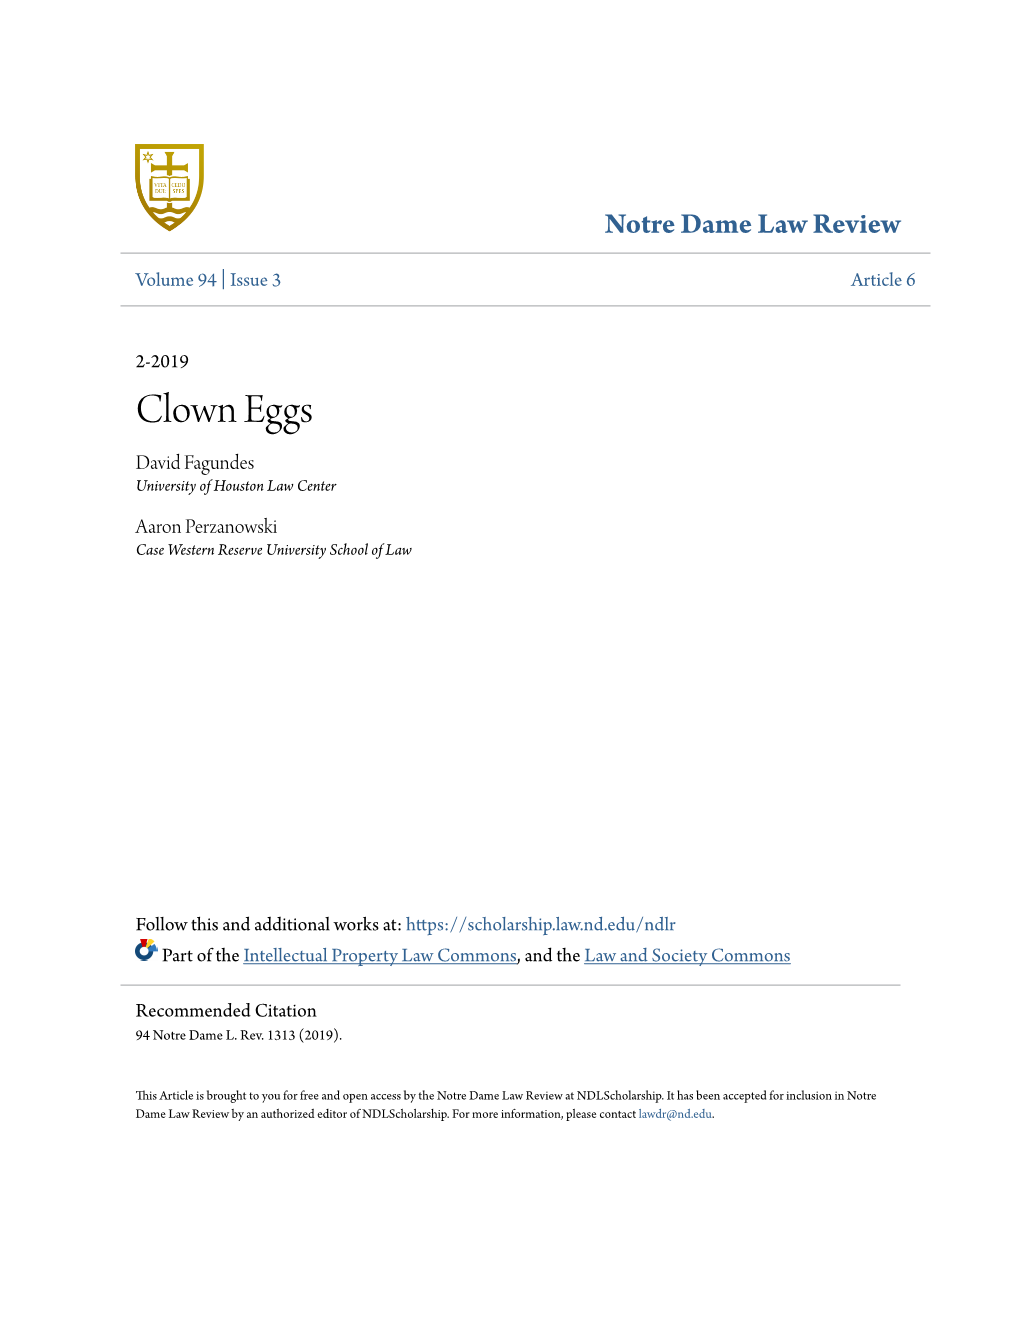 Clown Eggs David Fagundes University of Houston Law Center